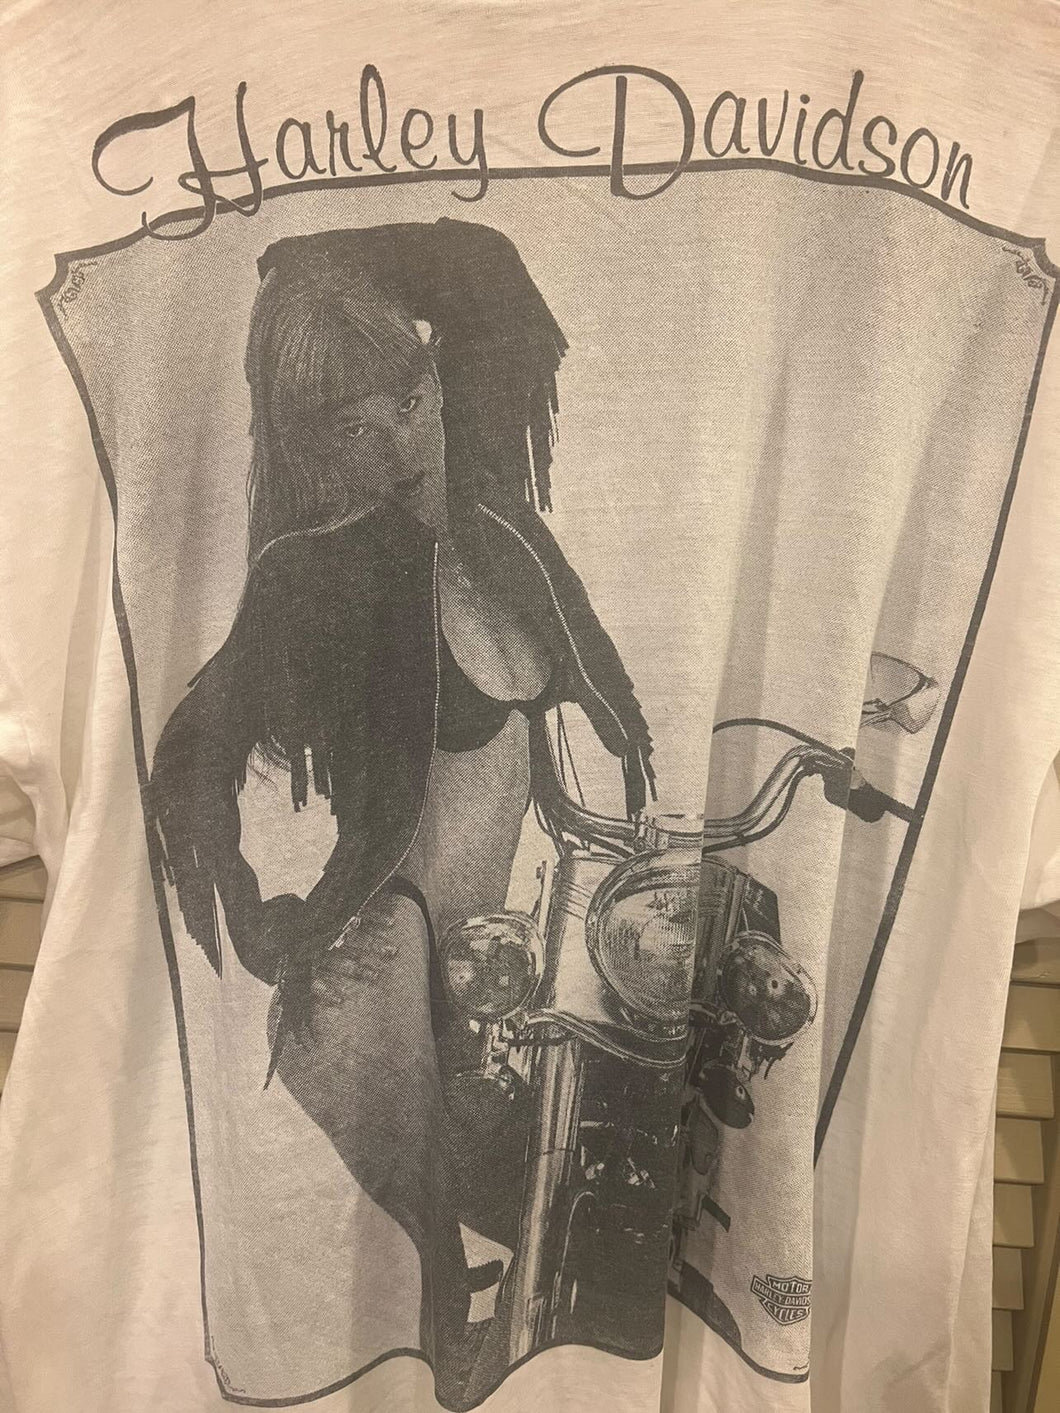 Harley Davidson shirt (secondhand)